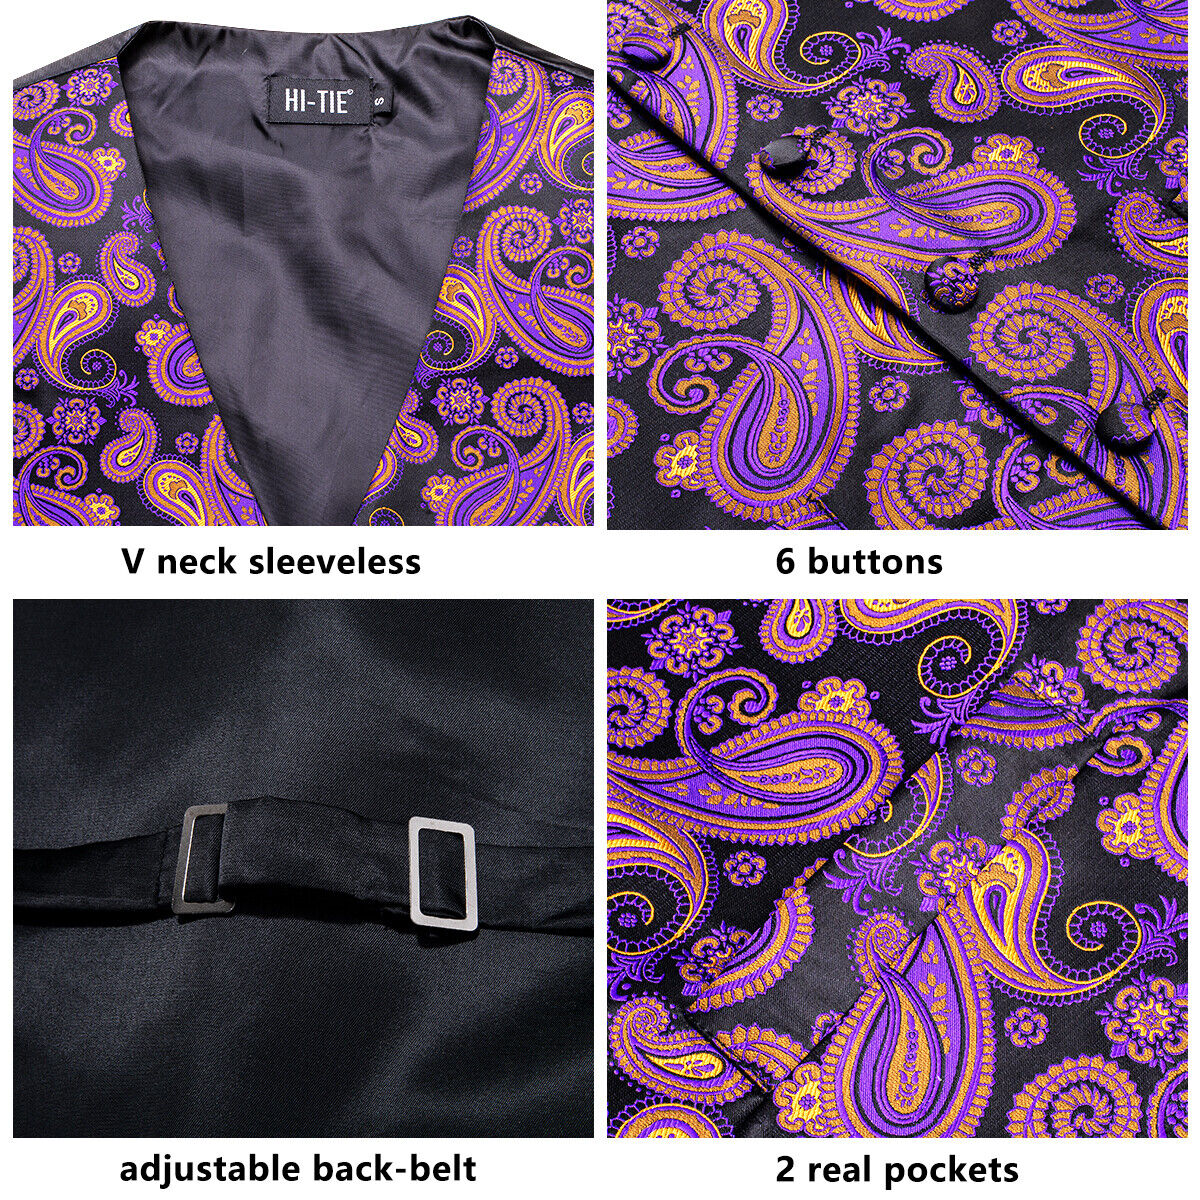 Designer Floral Waistcoat Silky Novelty Vest Purple Talks